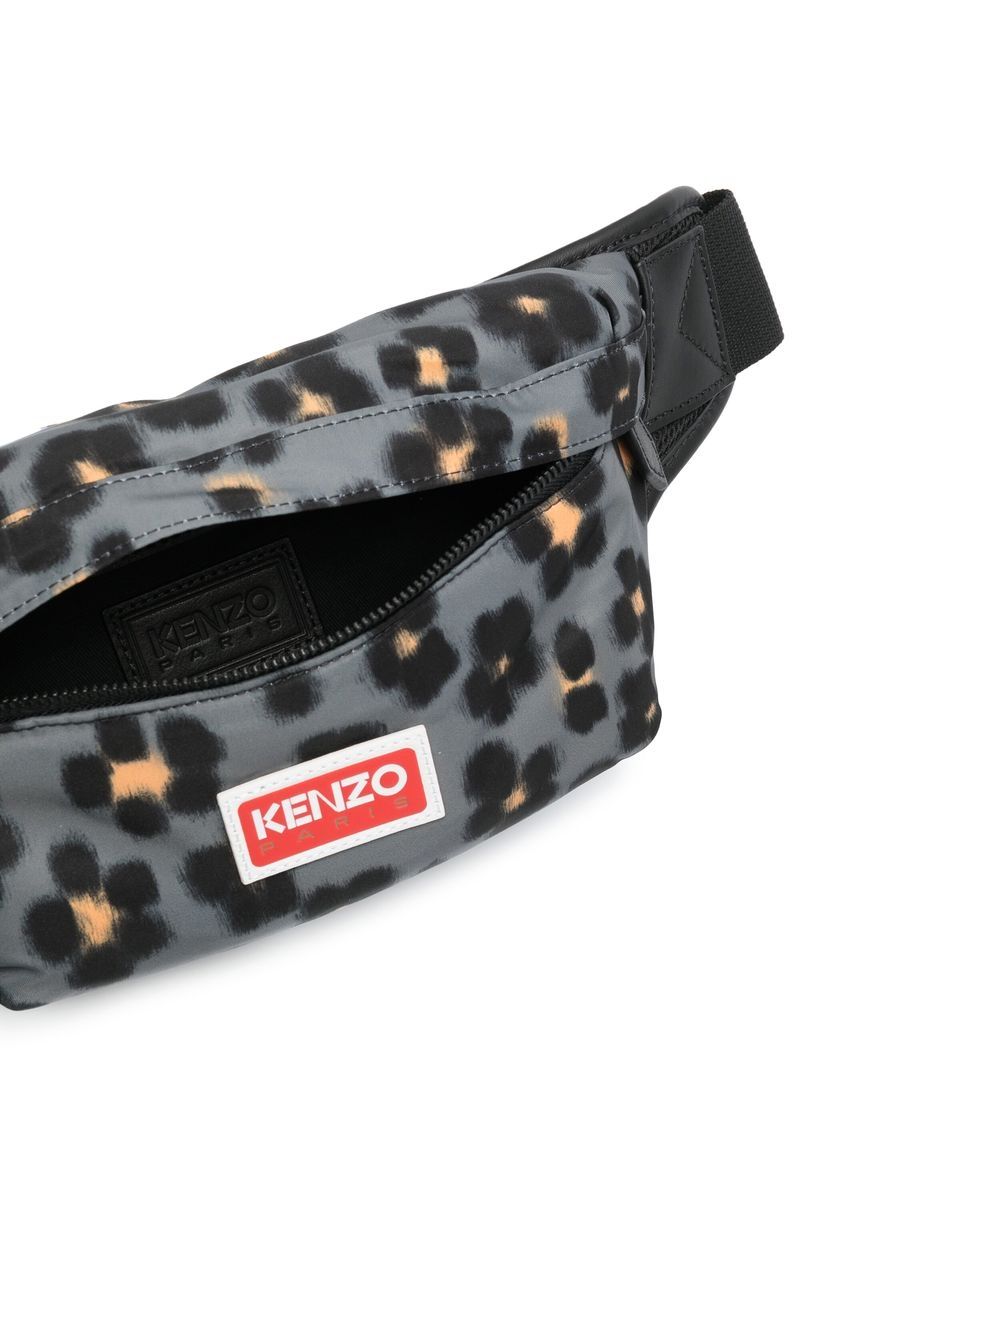 Kenzo KENZO- Leopard Print Beltbag